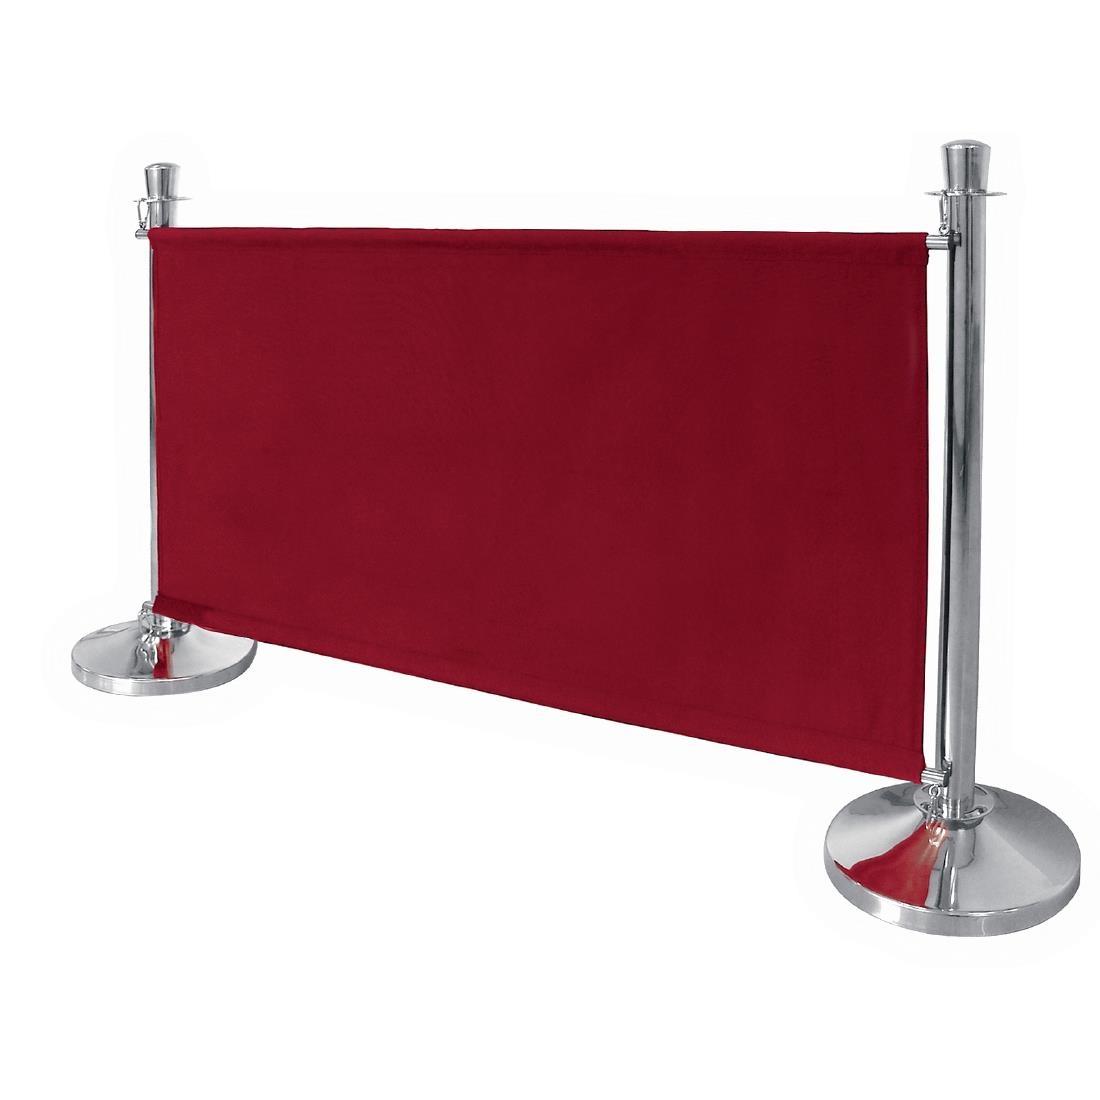 Bolero Red Canvas Barrier - CF138  - 1